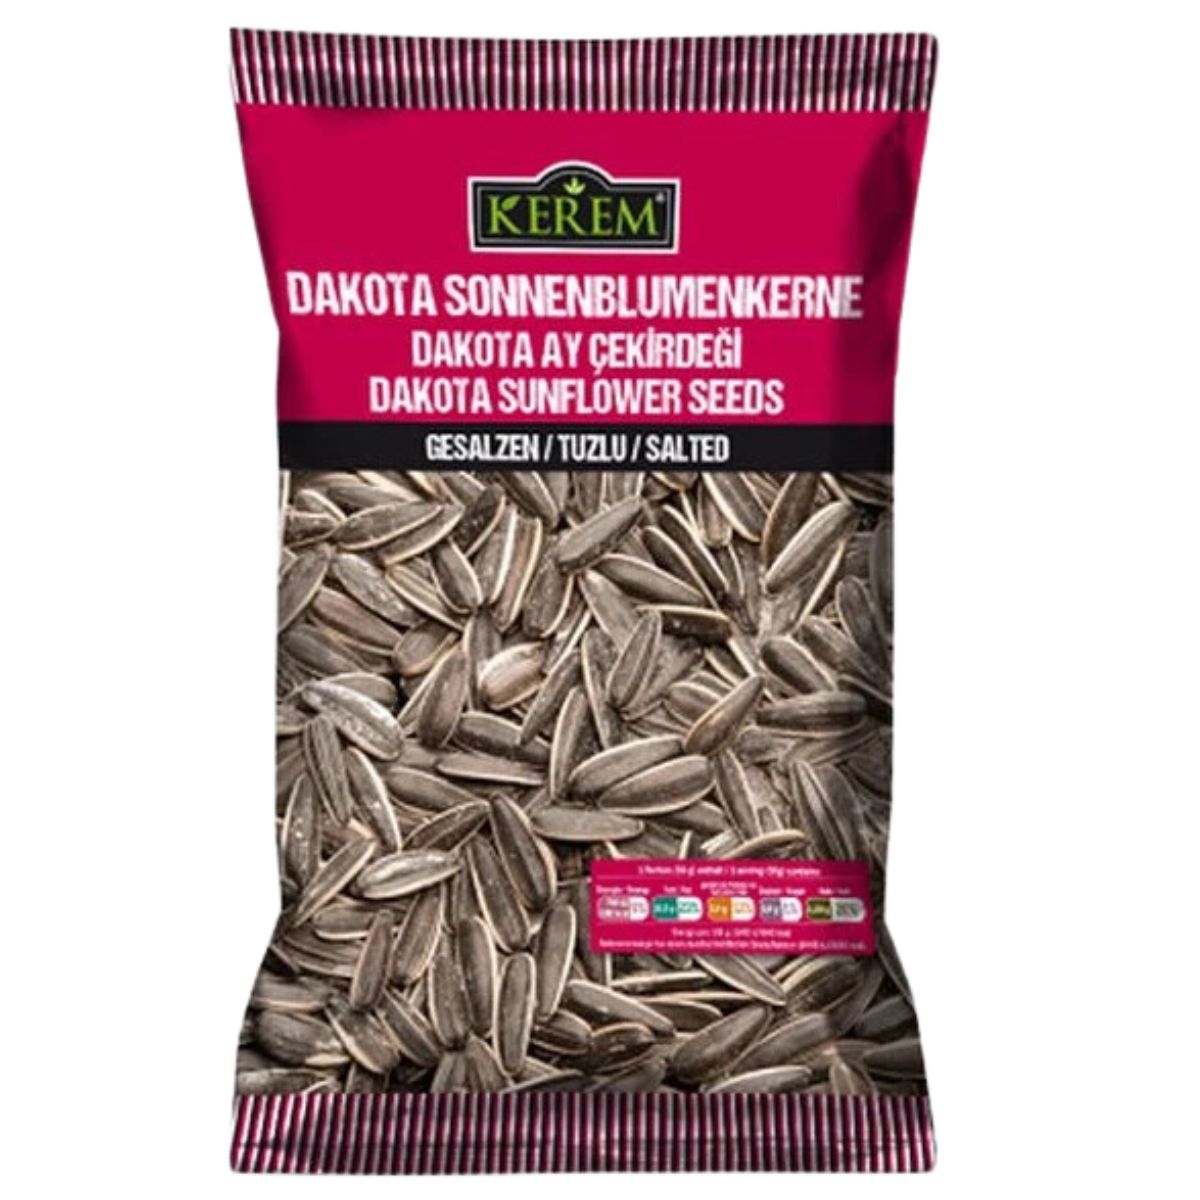 A package of Kerem - Dakota Tuzlu Sonnenblume Salzig sunflower seeds, salted variety.